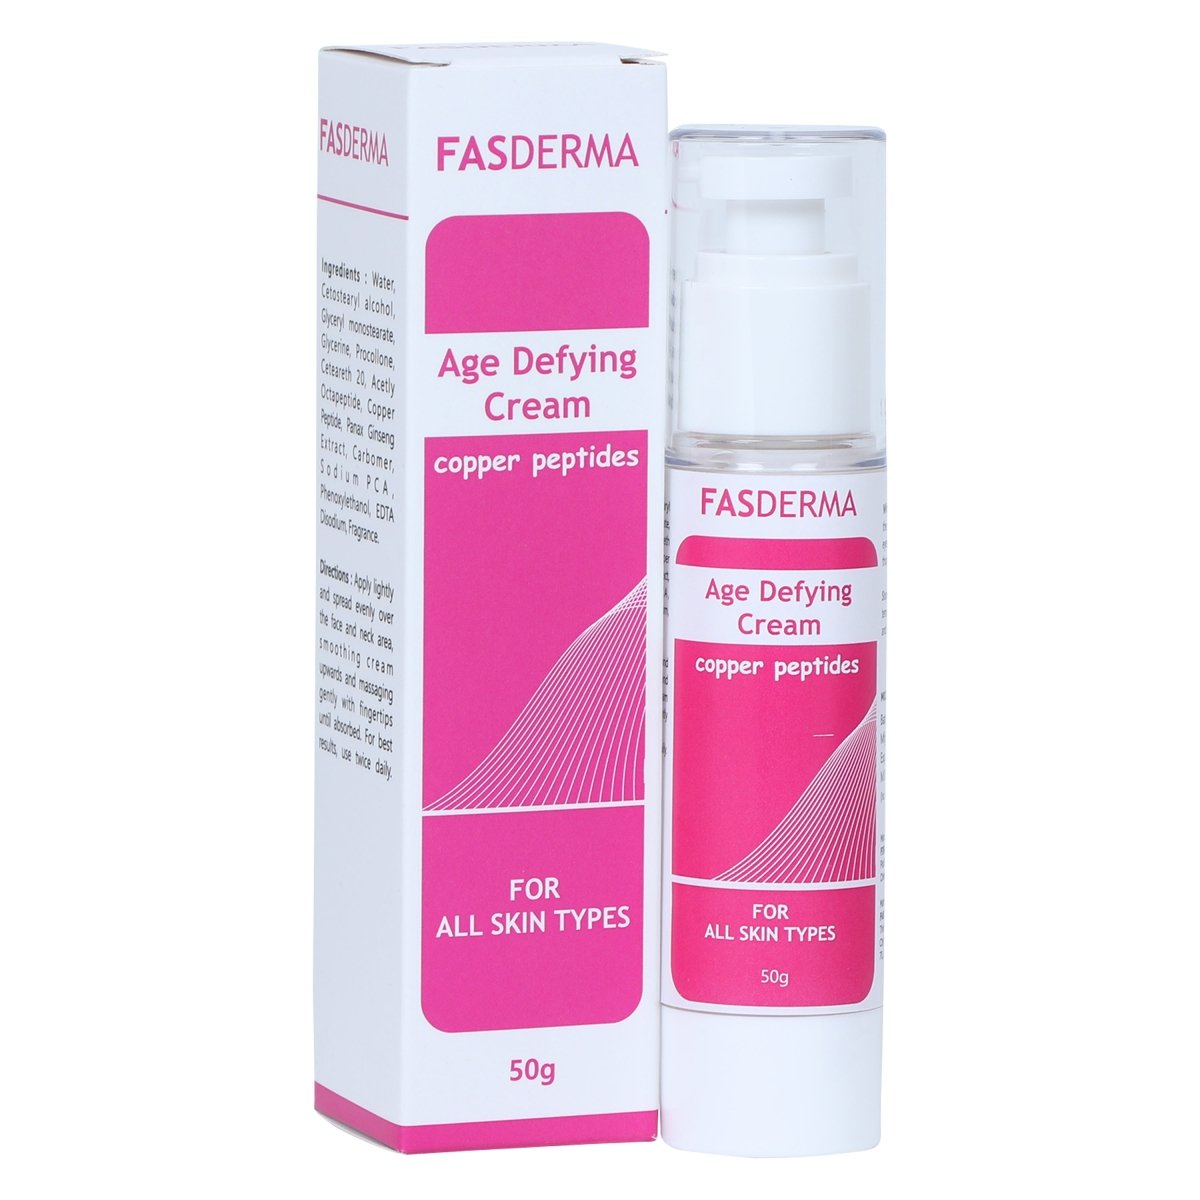 Fasderma Age Defying Anti Ageing Cream, 50gm - Fasderma India